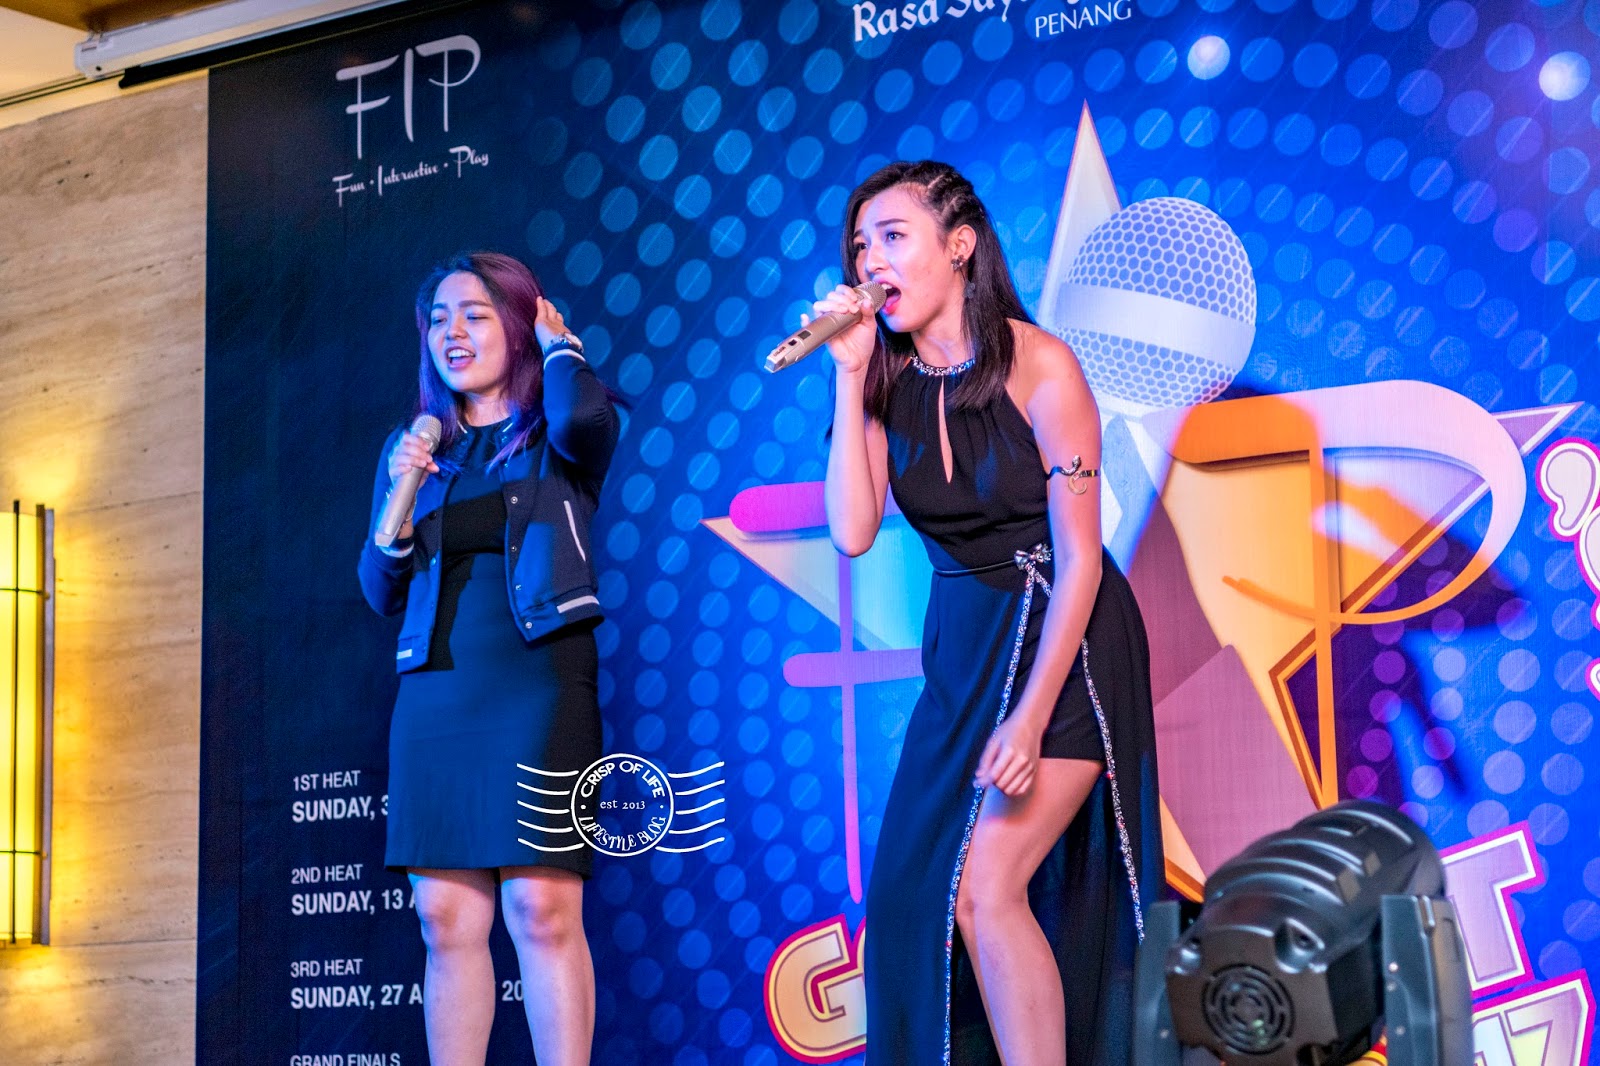 F.I.P's Got Talent Season 2 2017 Competition @ Shangri-La's Rasa Sayang Resort & Spa, Penang